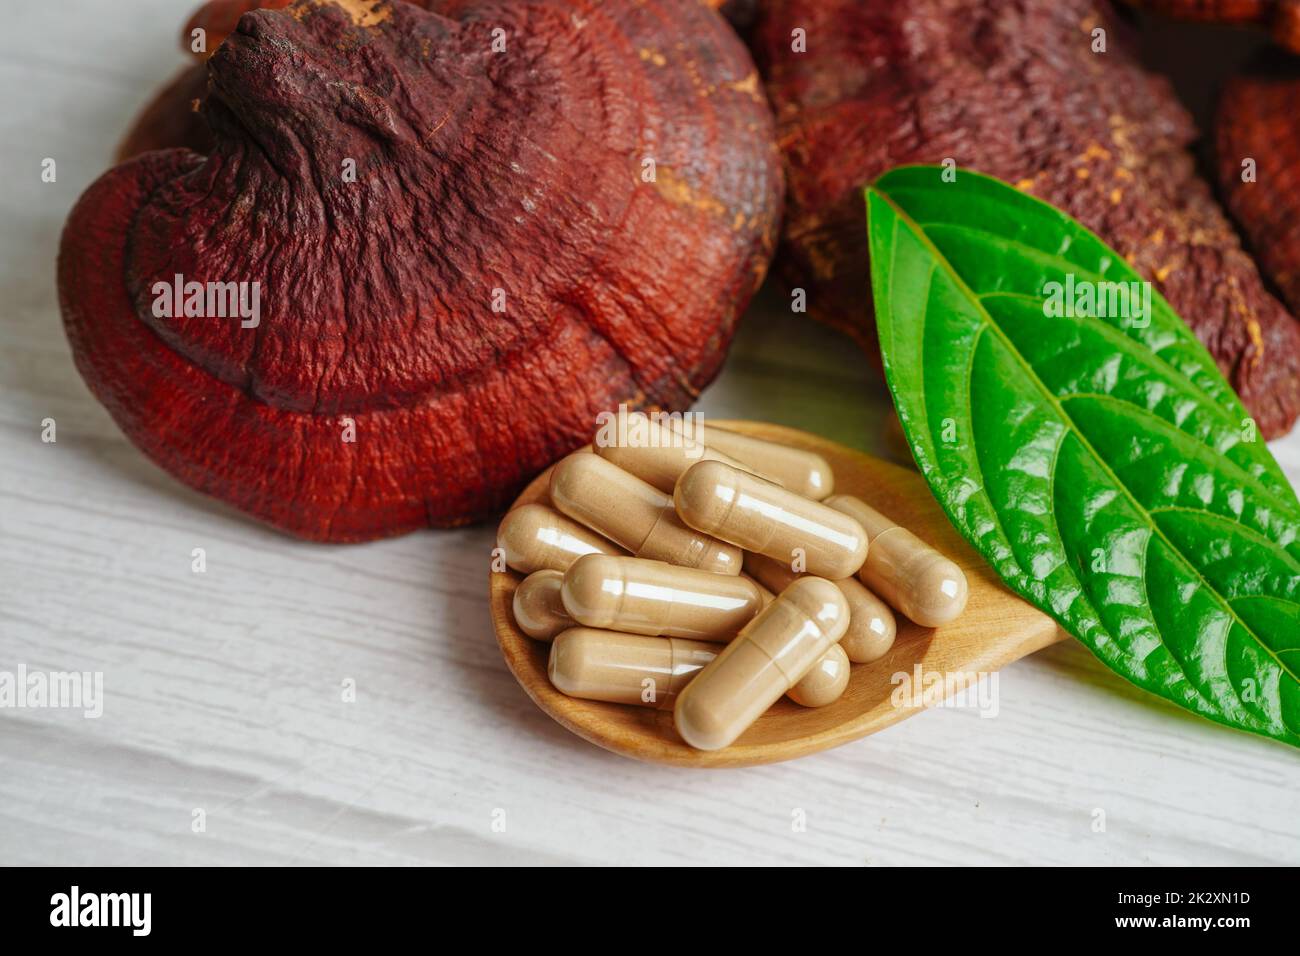 Lingzhi o Reishi funghi con capsule, alimenti biologici naturali sani. Foto Stock